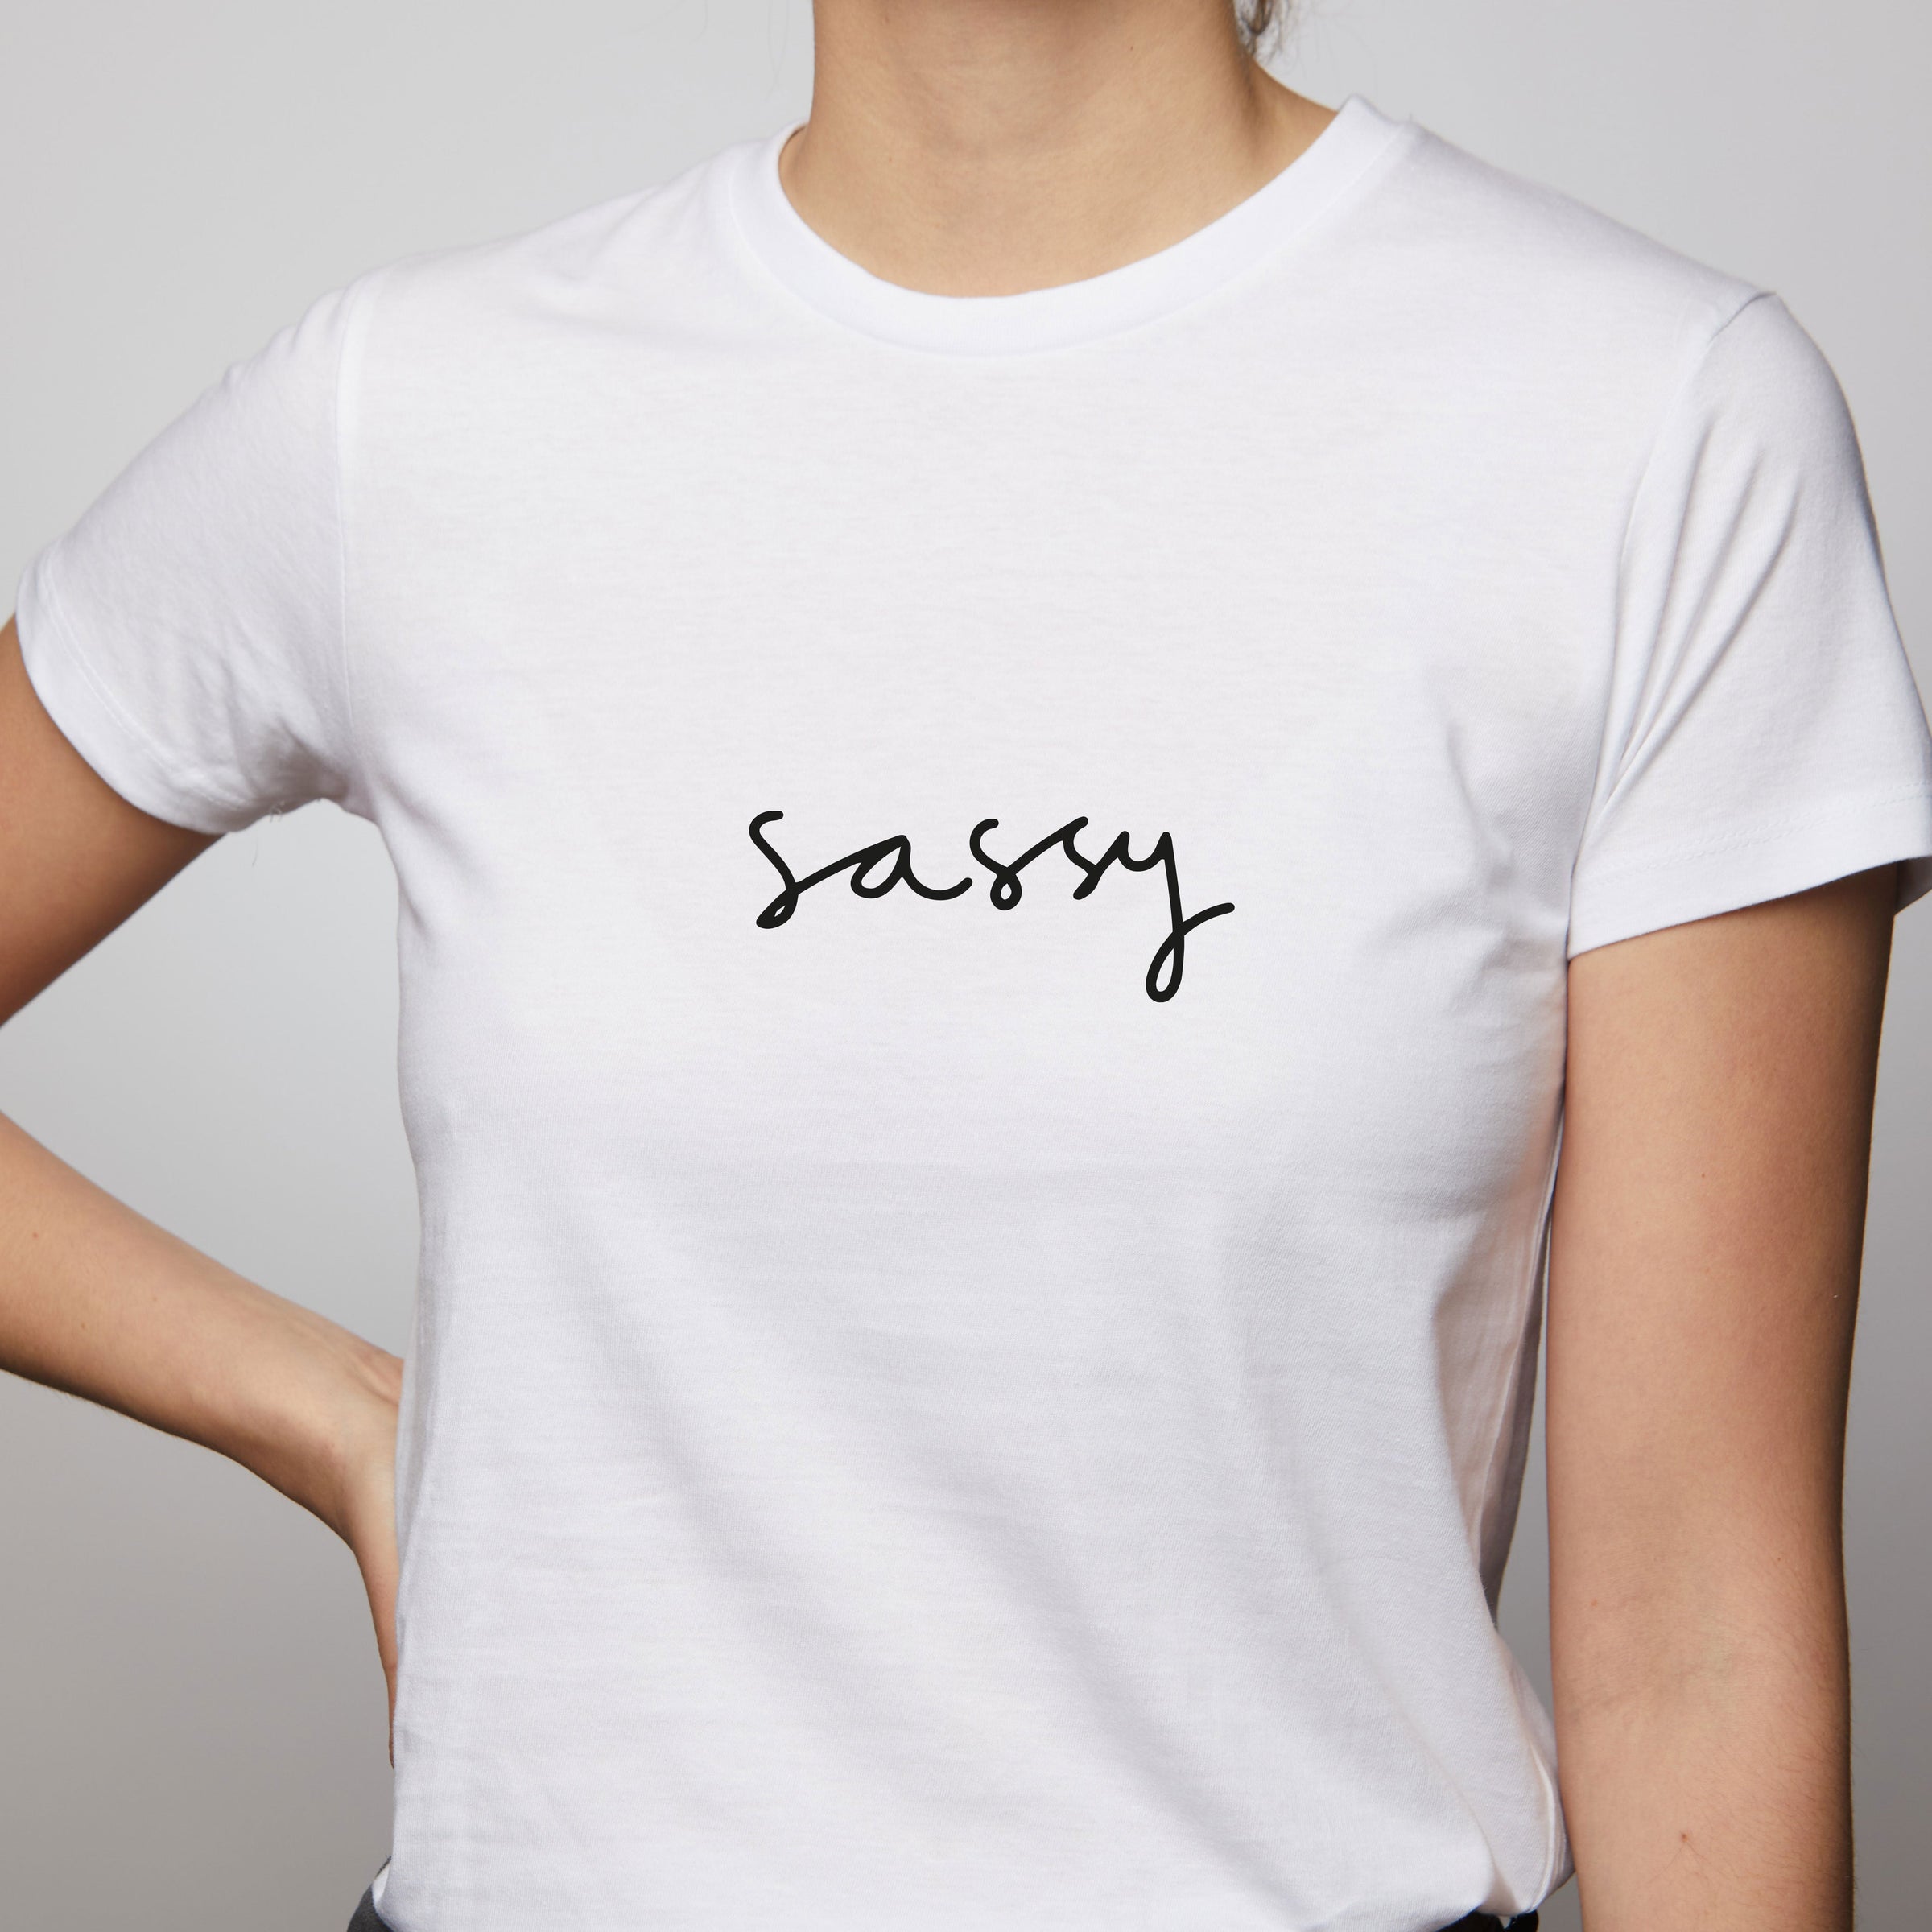 Sassy T-Shirt - White